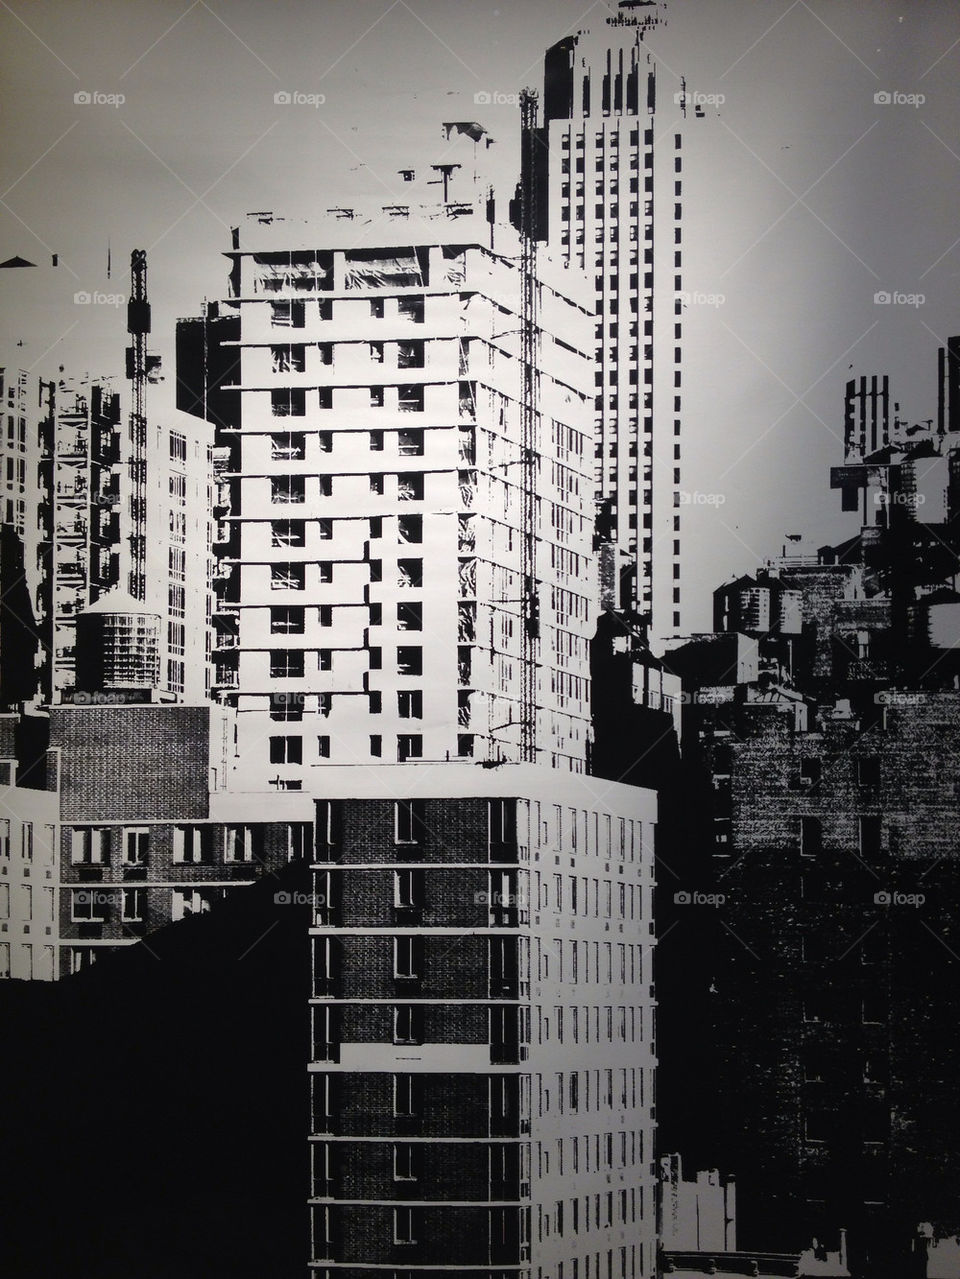 Urbanscape in high contrast artwork